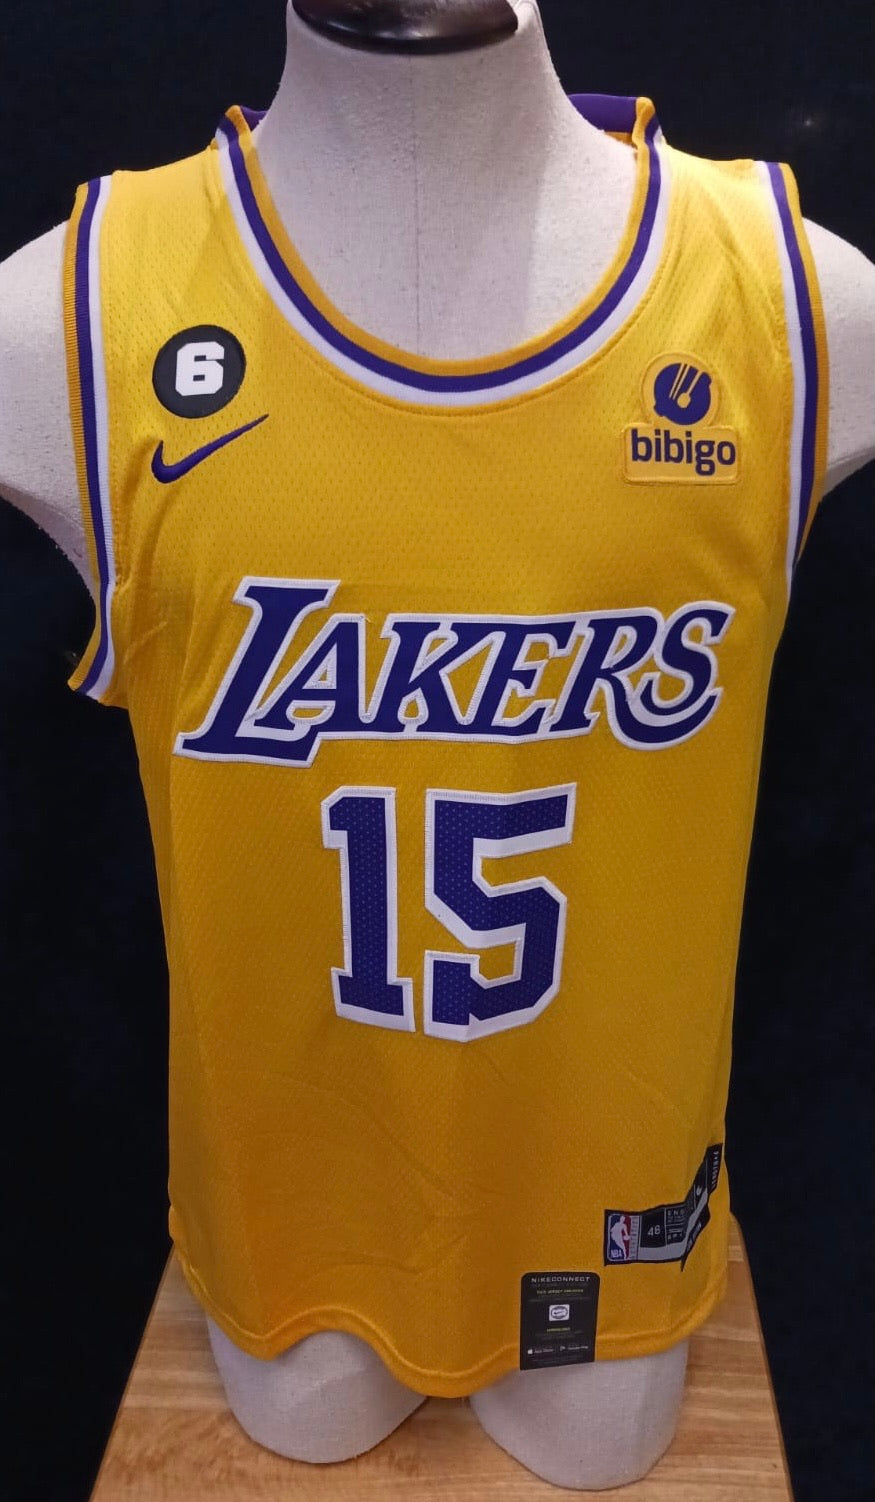 Nike Los Angeles Lakers Austin Reaves Association Swingman Jersey XL